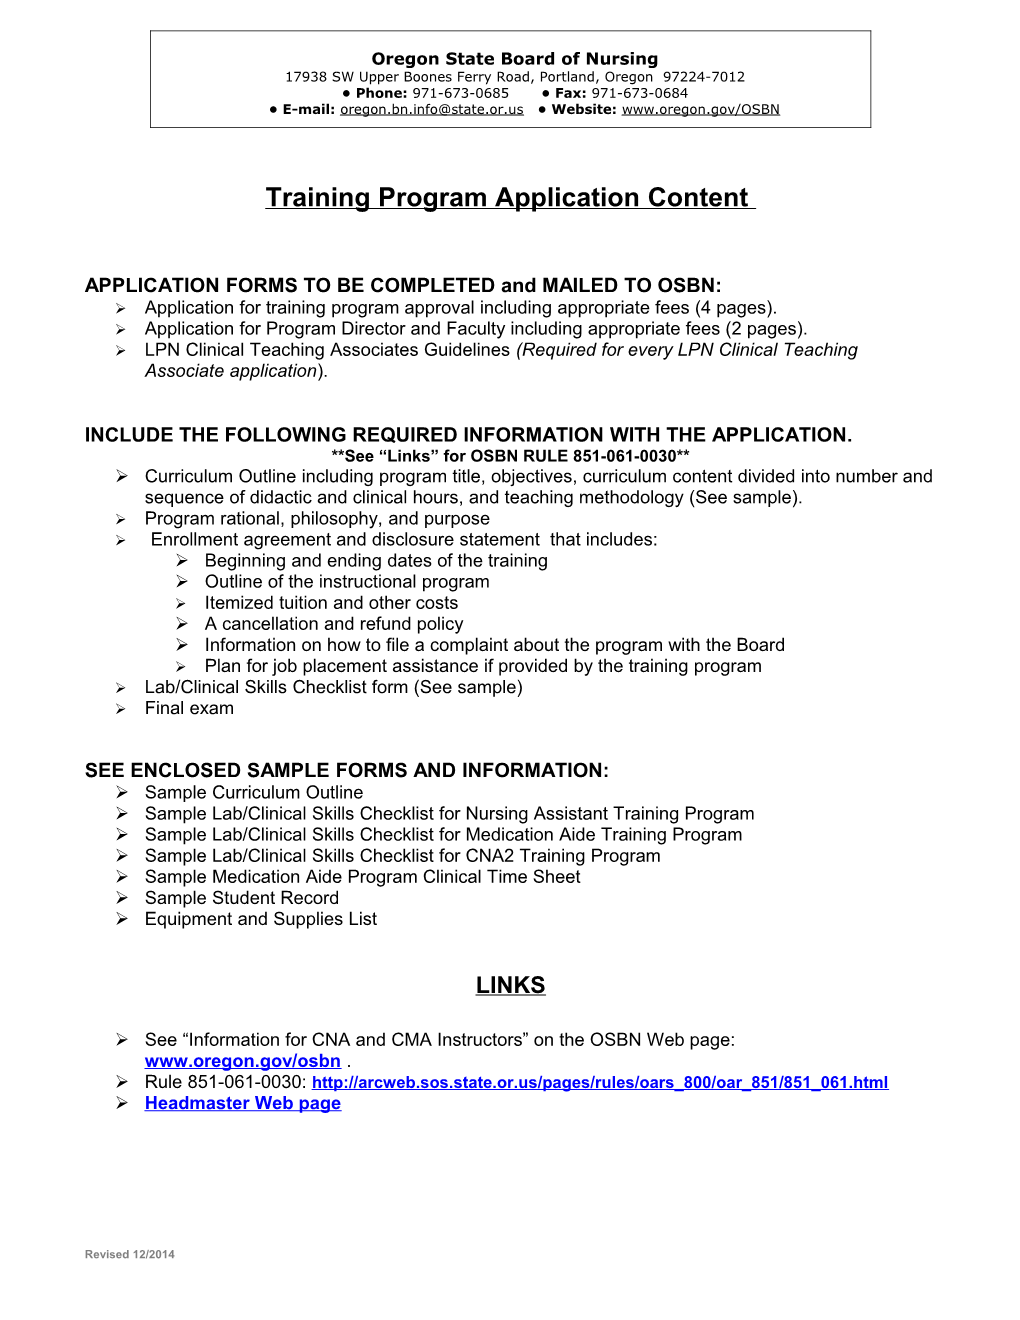 Nursing Assistant & Medication Aide Training Program Approval Information Package